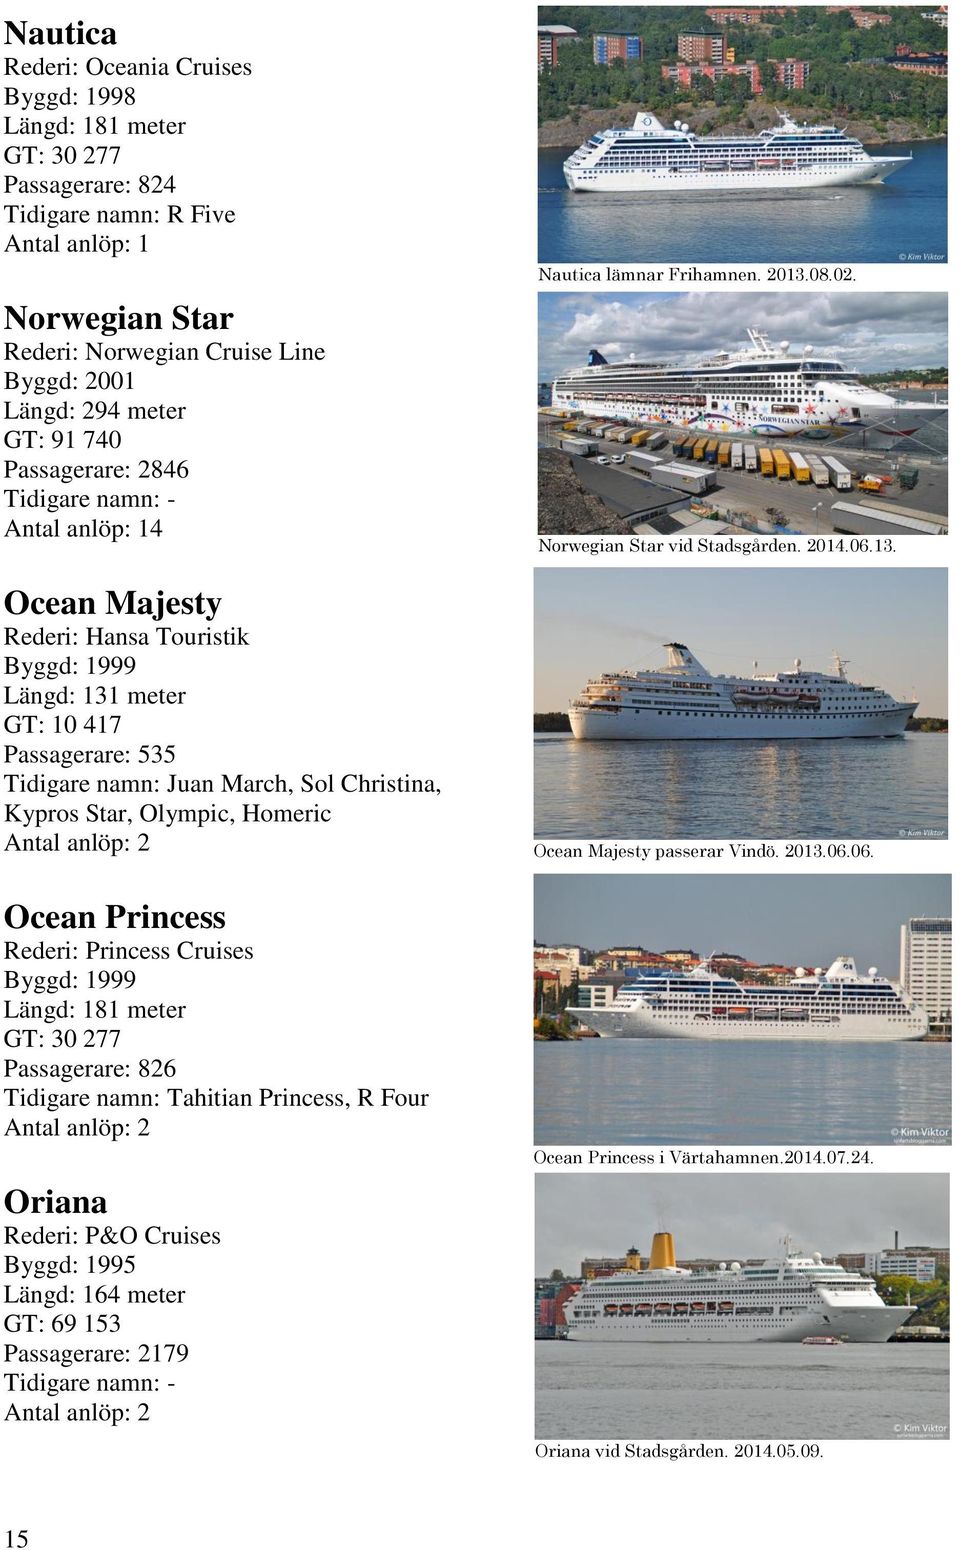 Princess Rederi: Princess Cruises Byggd: 1999 Längd: 181 meter GT: 30 277 Passagerare: 826 Tidigare namn: Tahitian Princess, R Four Oriana Rederi: P&O Cruises Byggd: 1995 Längd: 164 meter GT: 69 153